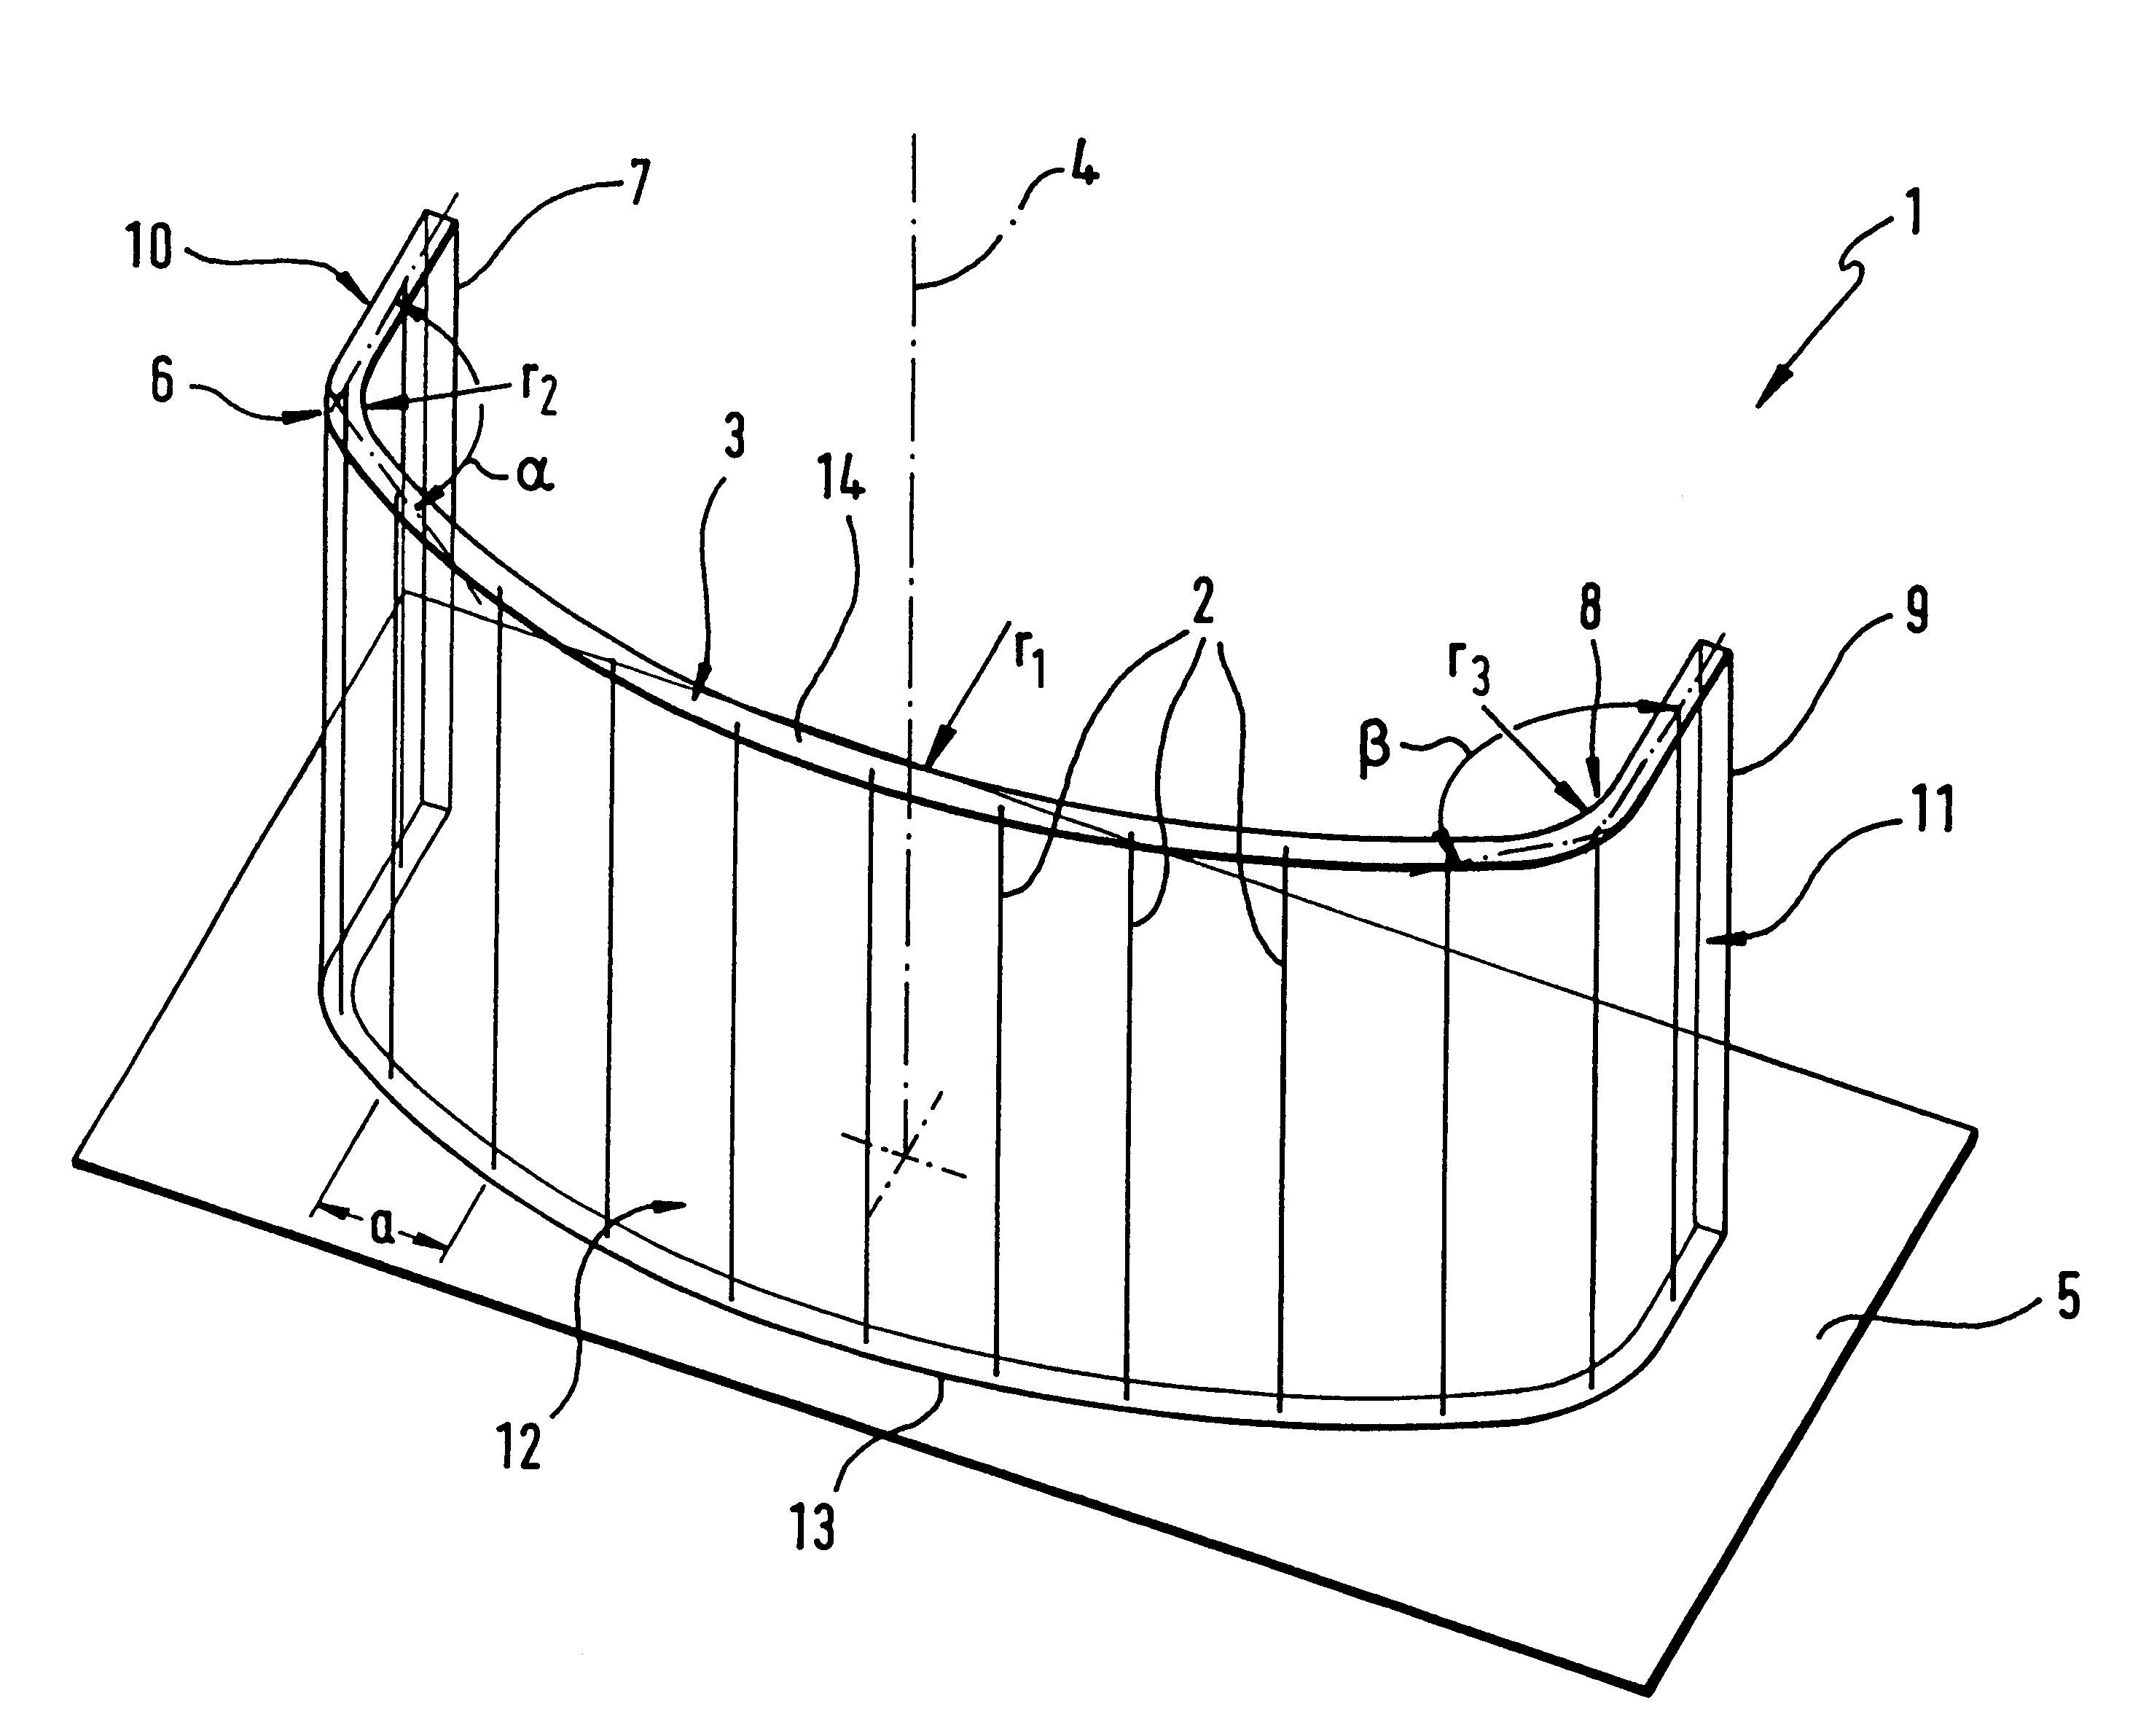 Noise-protection wall-segment